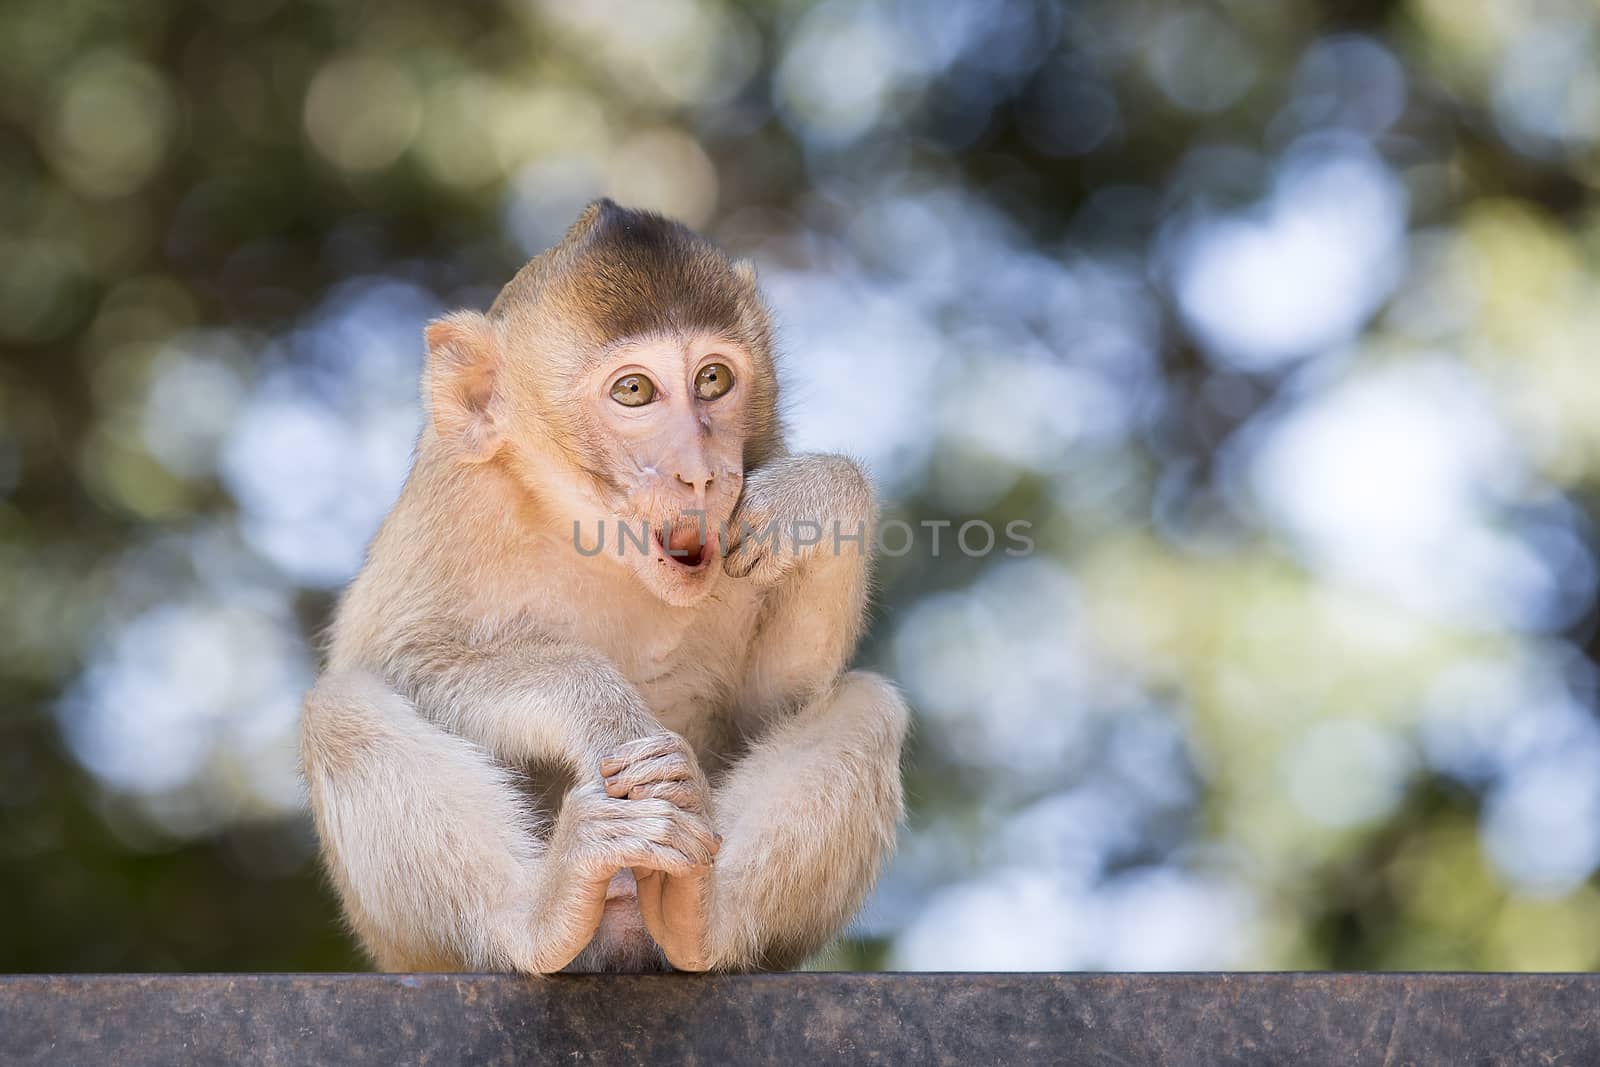 Monkey baby by Chattranusorn09